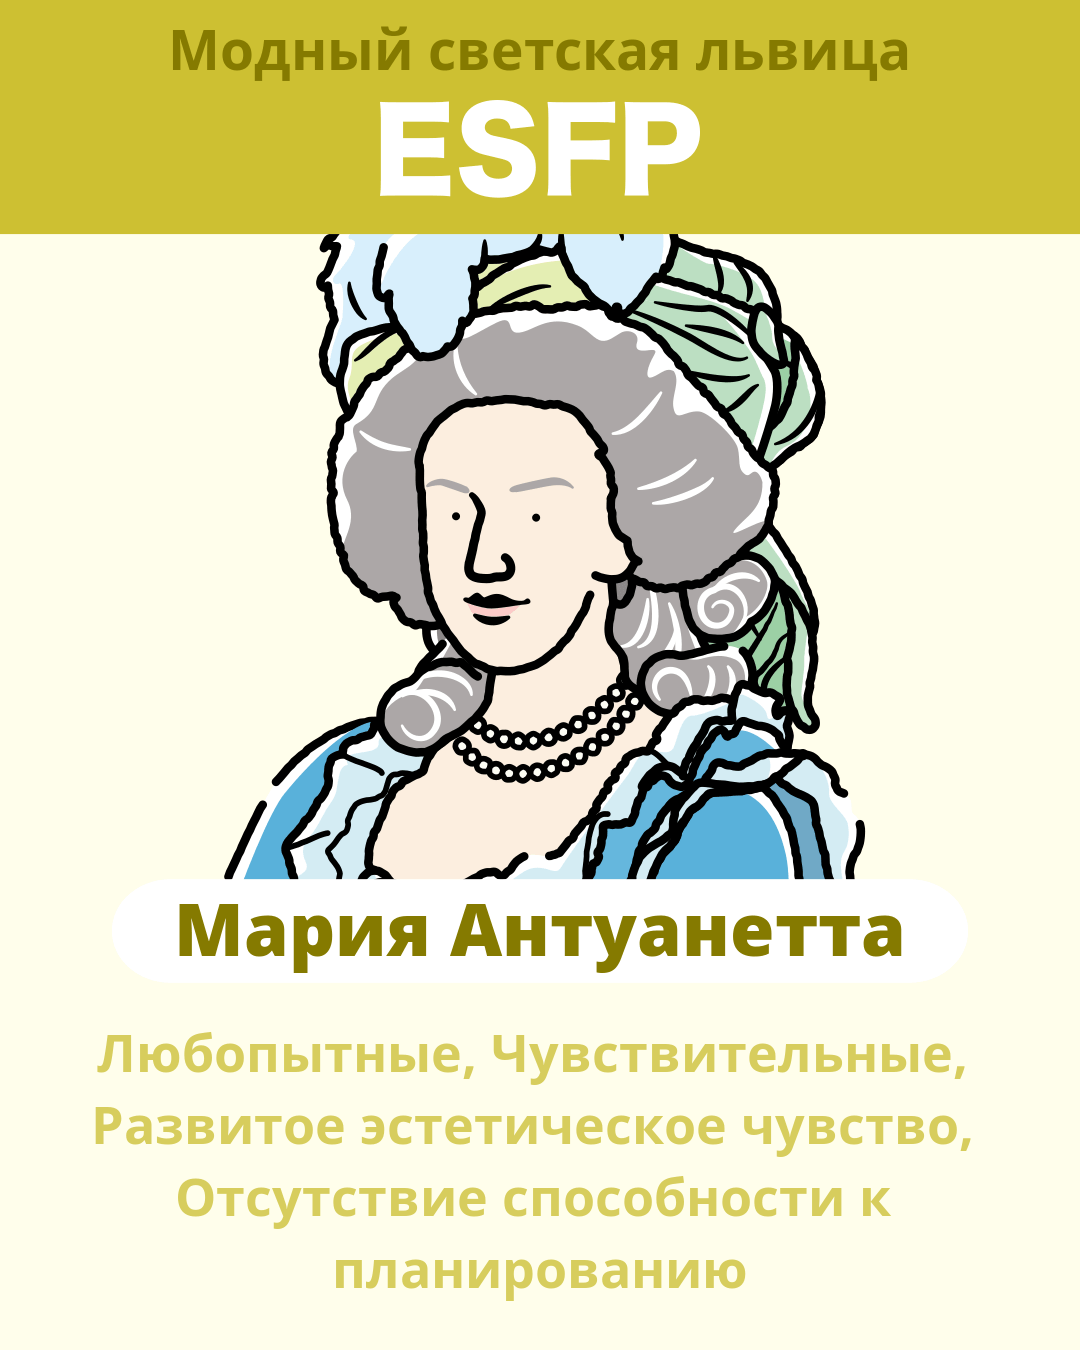 Мария Антуанетта - ESFP